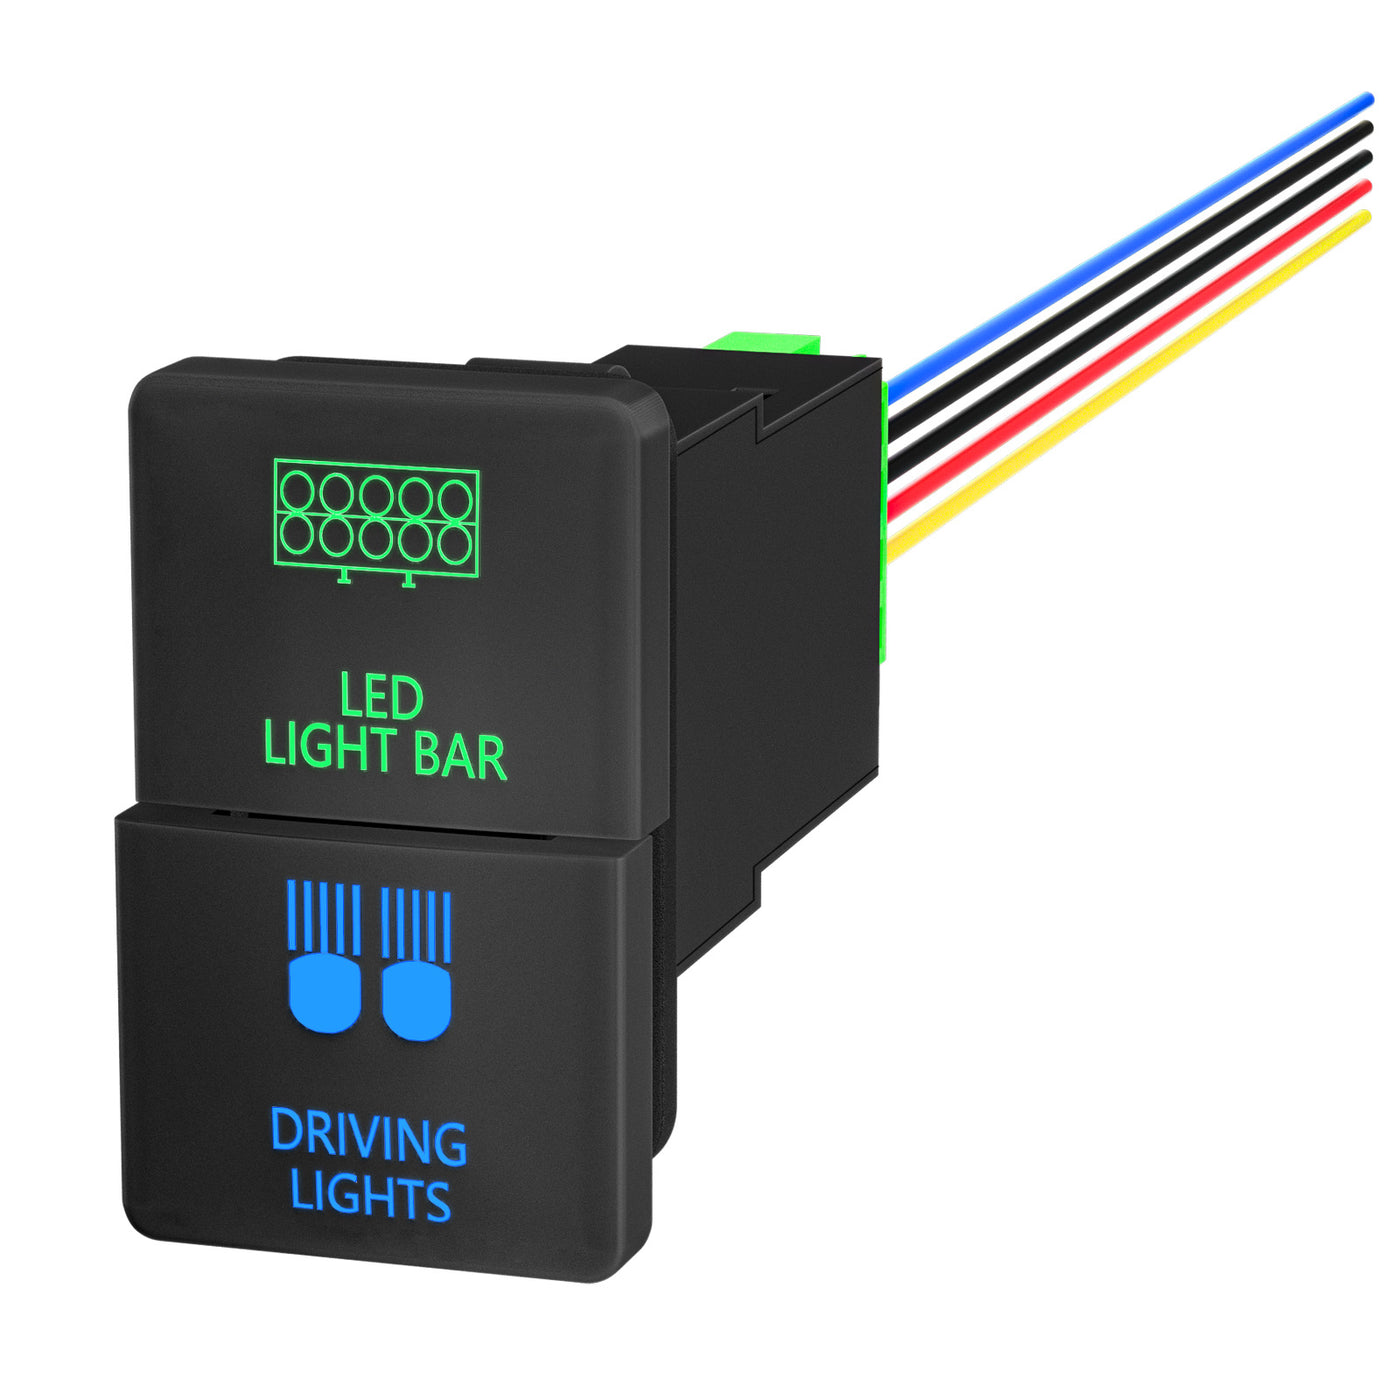 12VDC LED Light Bar and Driving Light Symbol Dual Push Button Switch